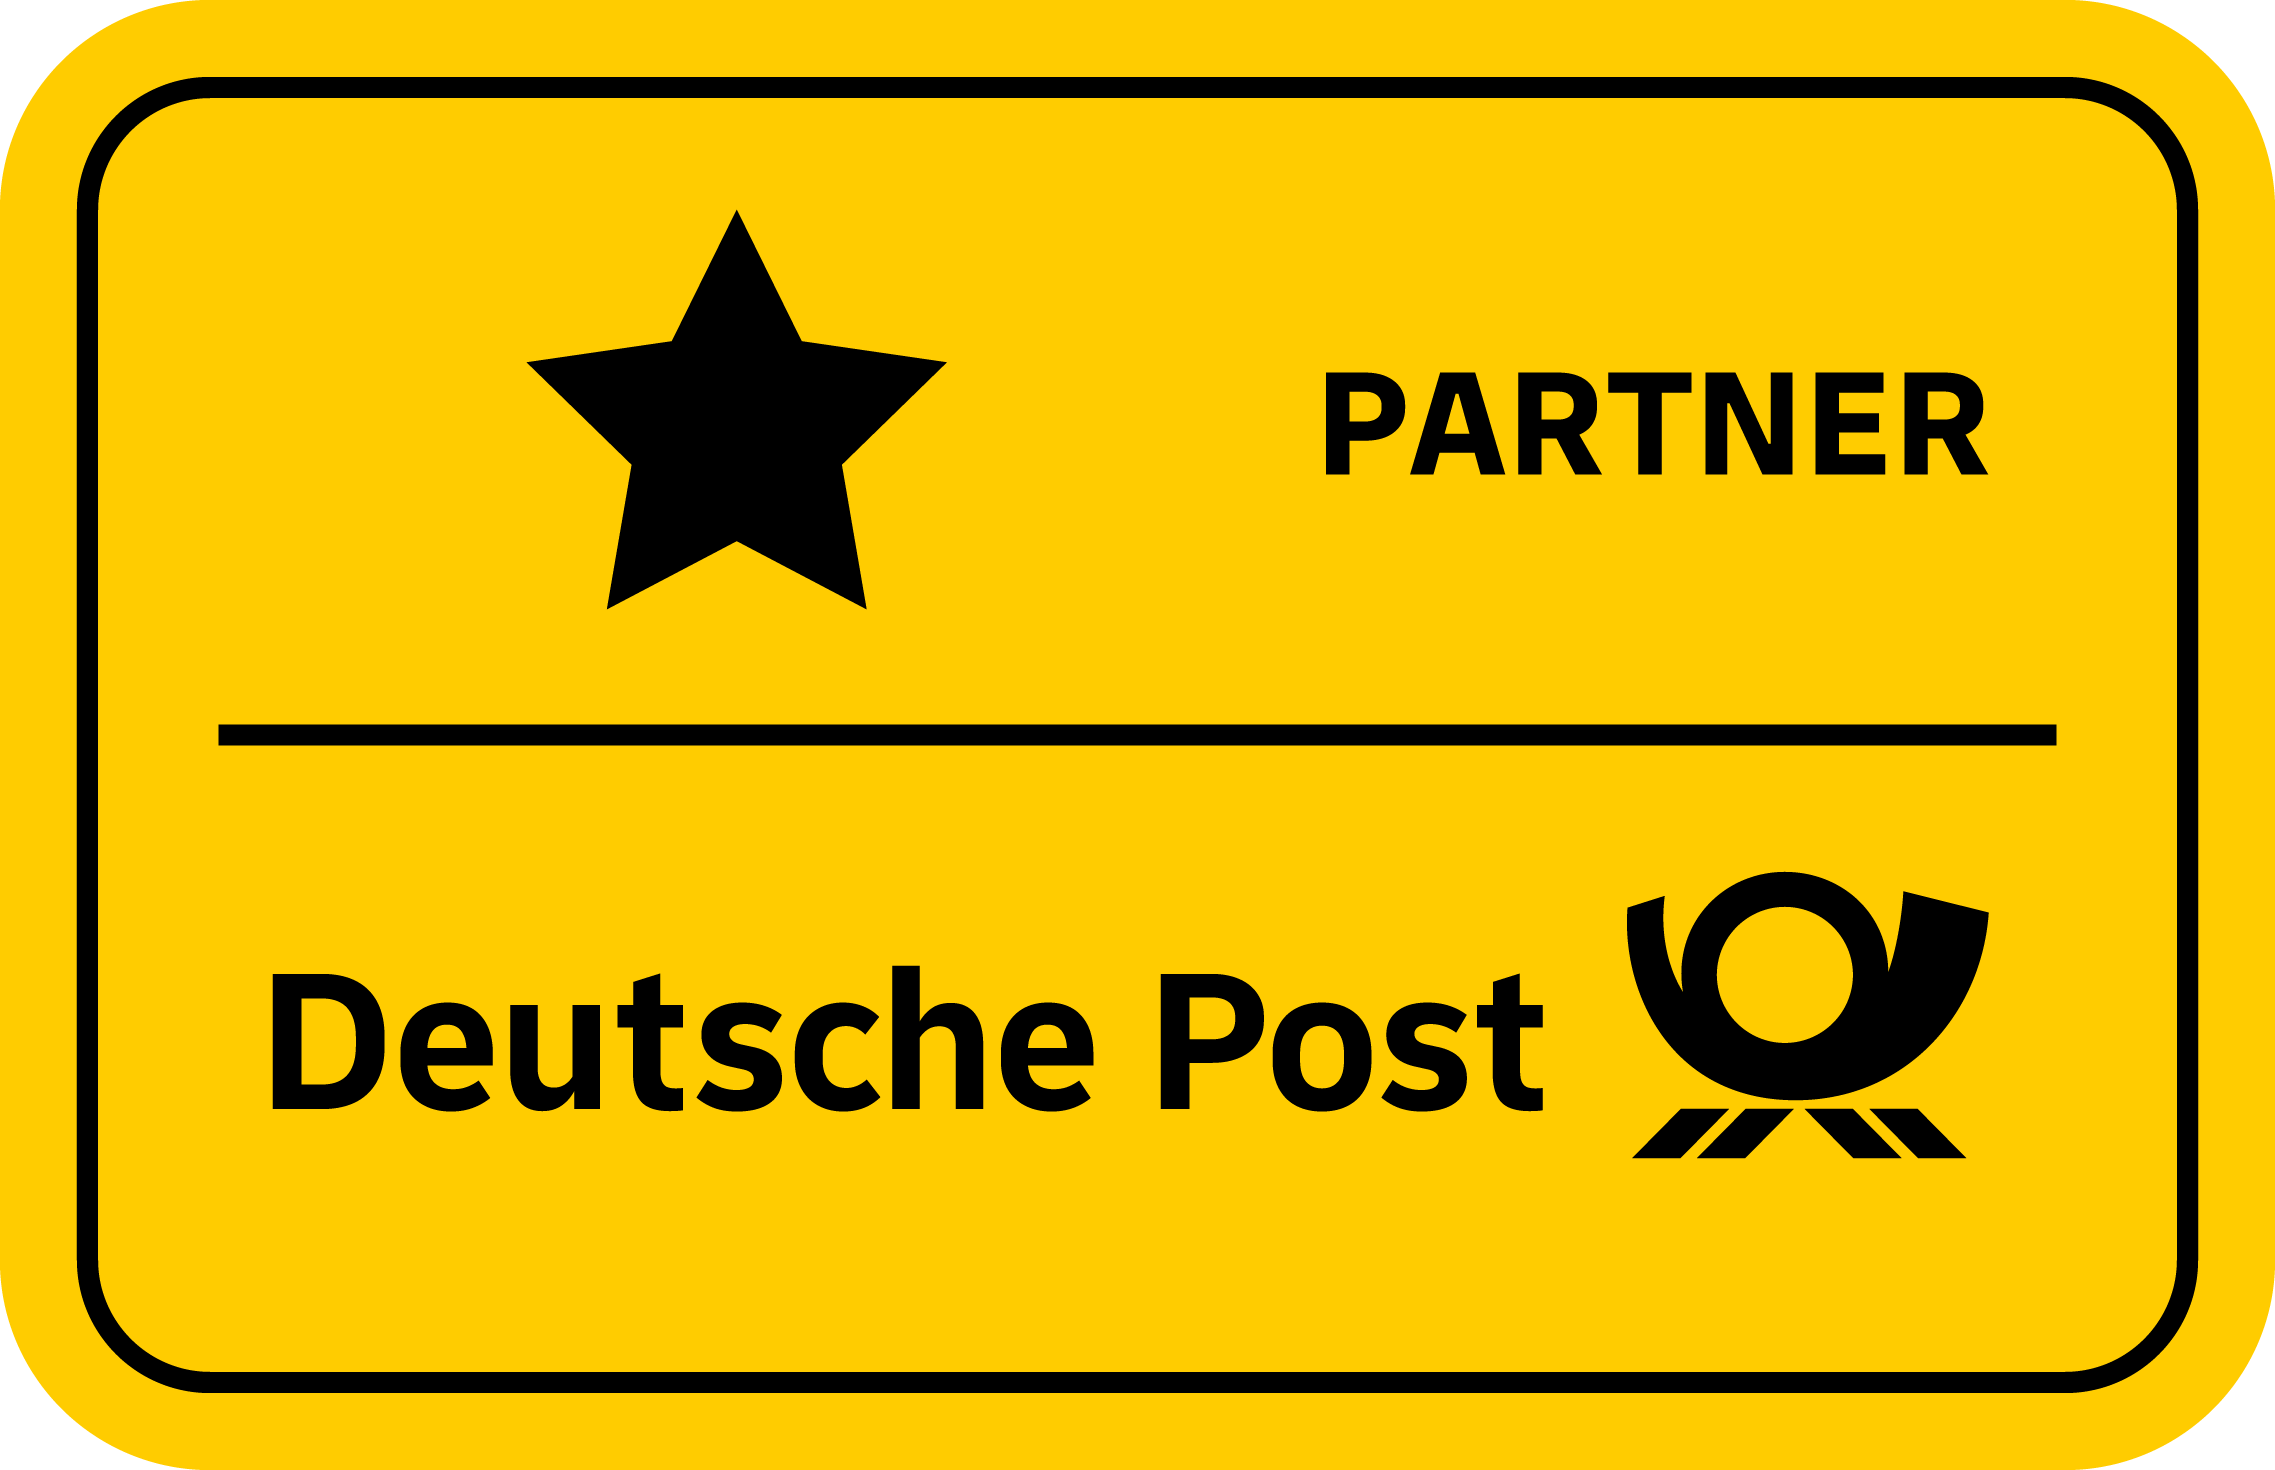 Deutsche Post & Automation People Partnerschaft